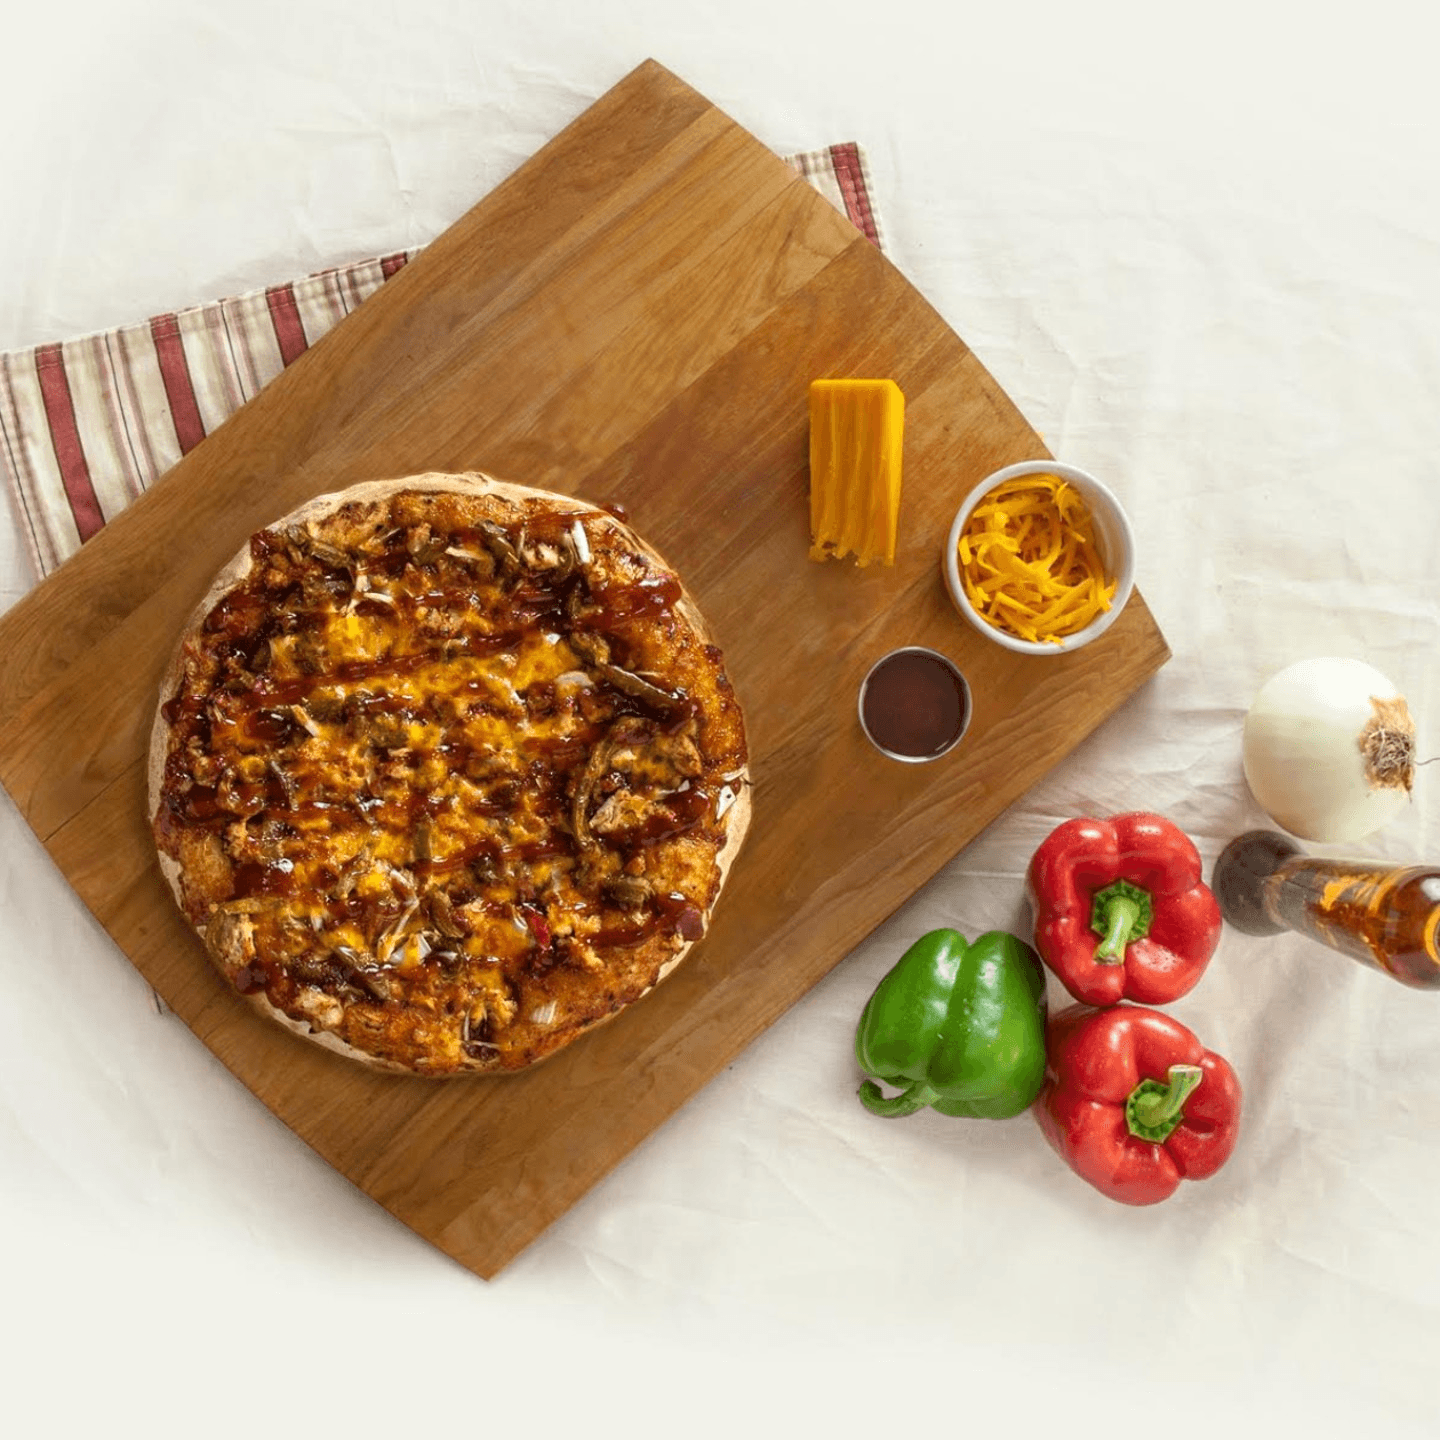 Our Bourbon BBQ Pizza! 🍕🧀